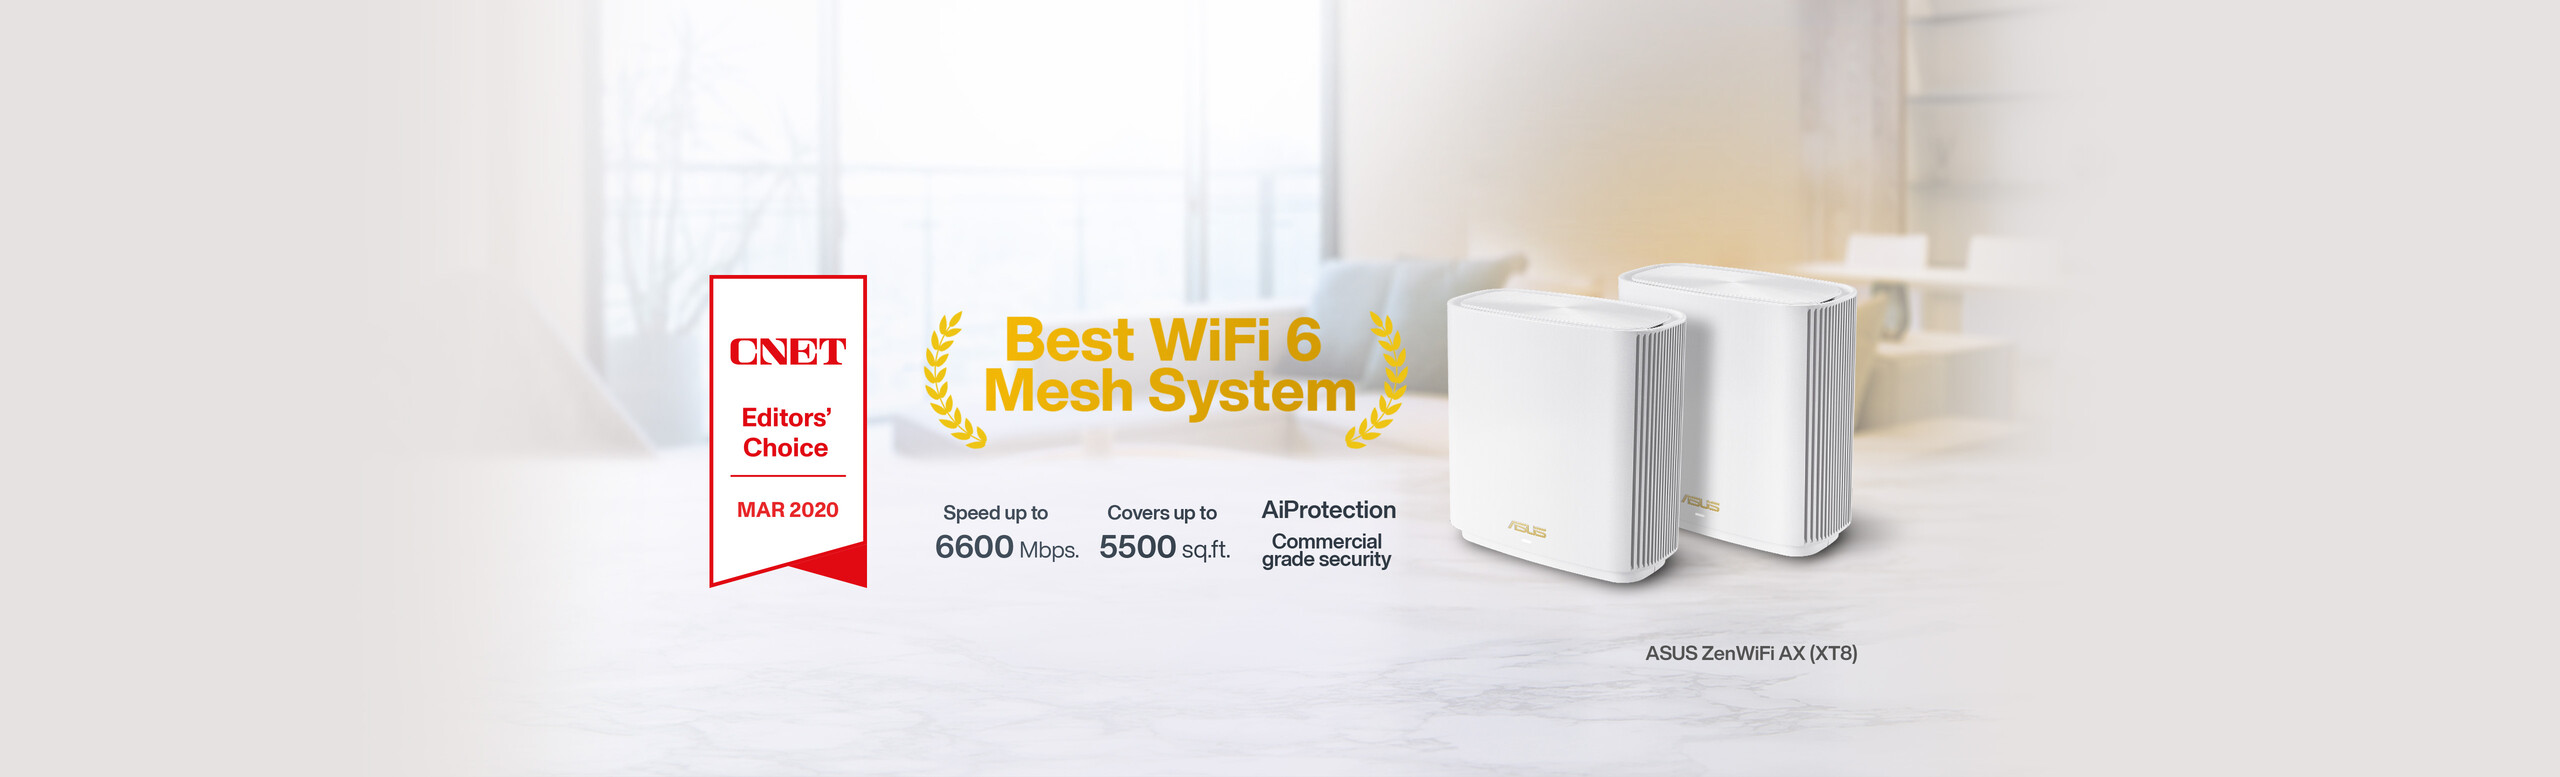 CNET Best Wifi 6 Mesh System